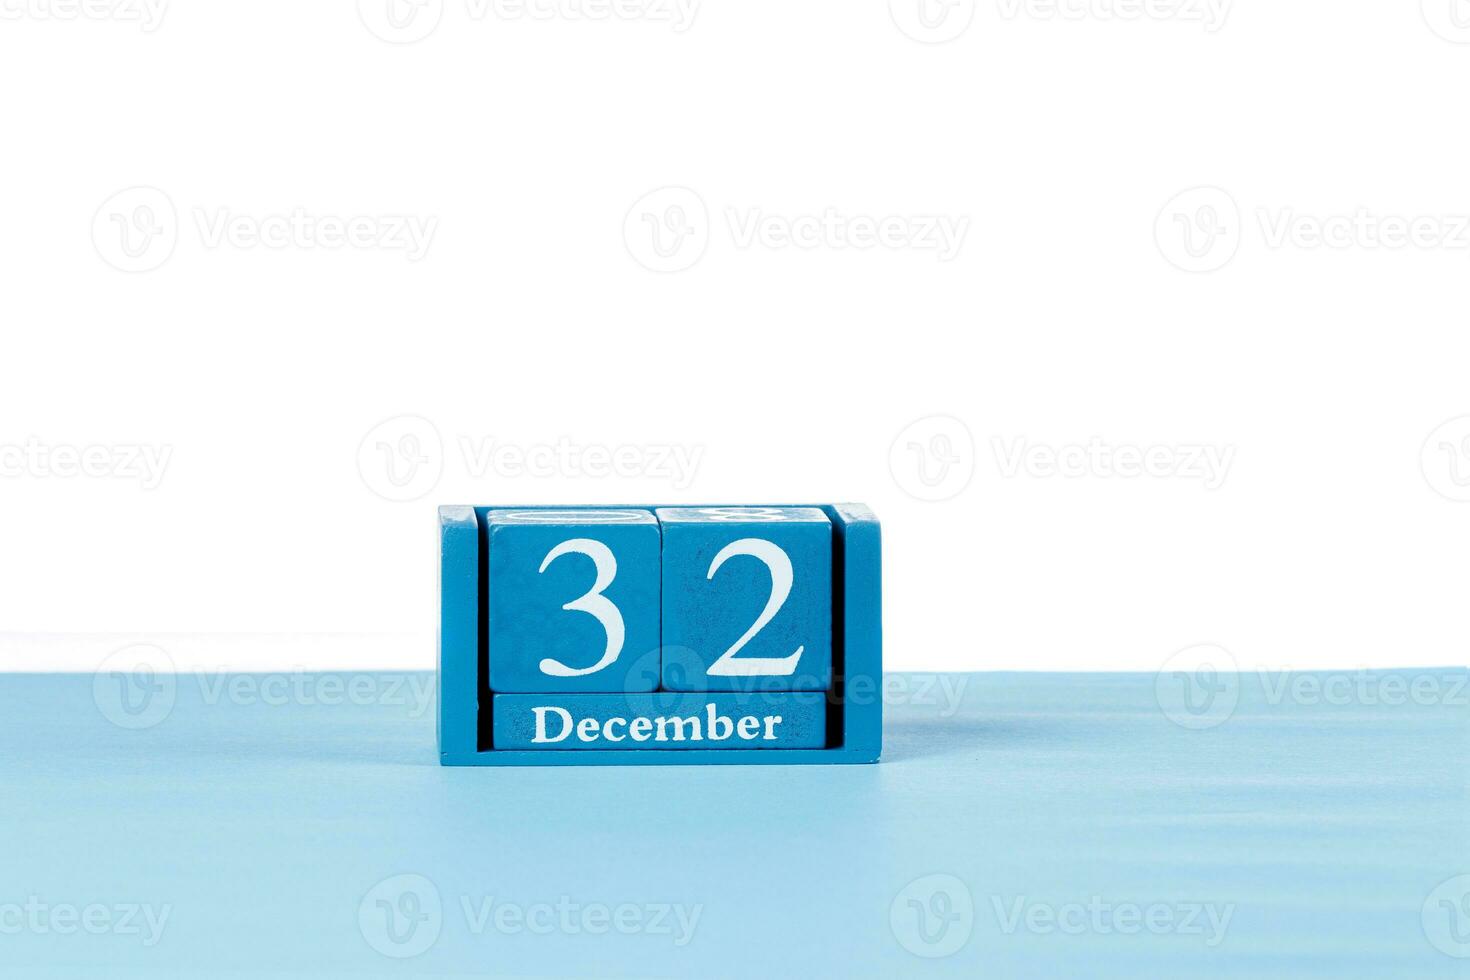 Wooden calendar December 32 on a white background photo